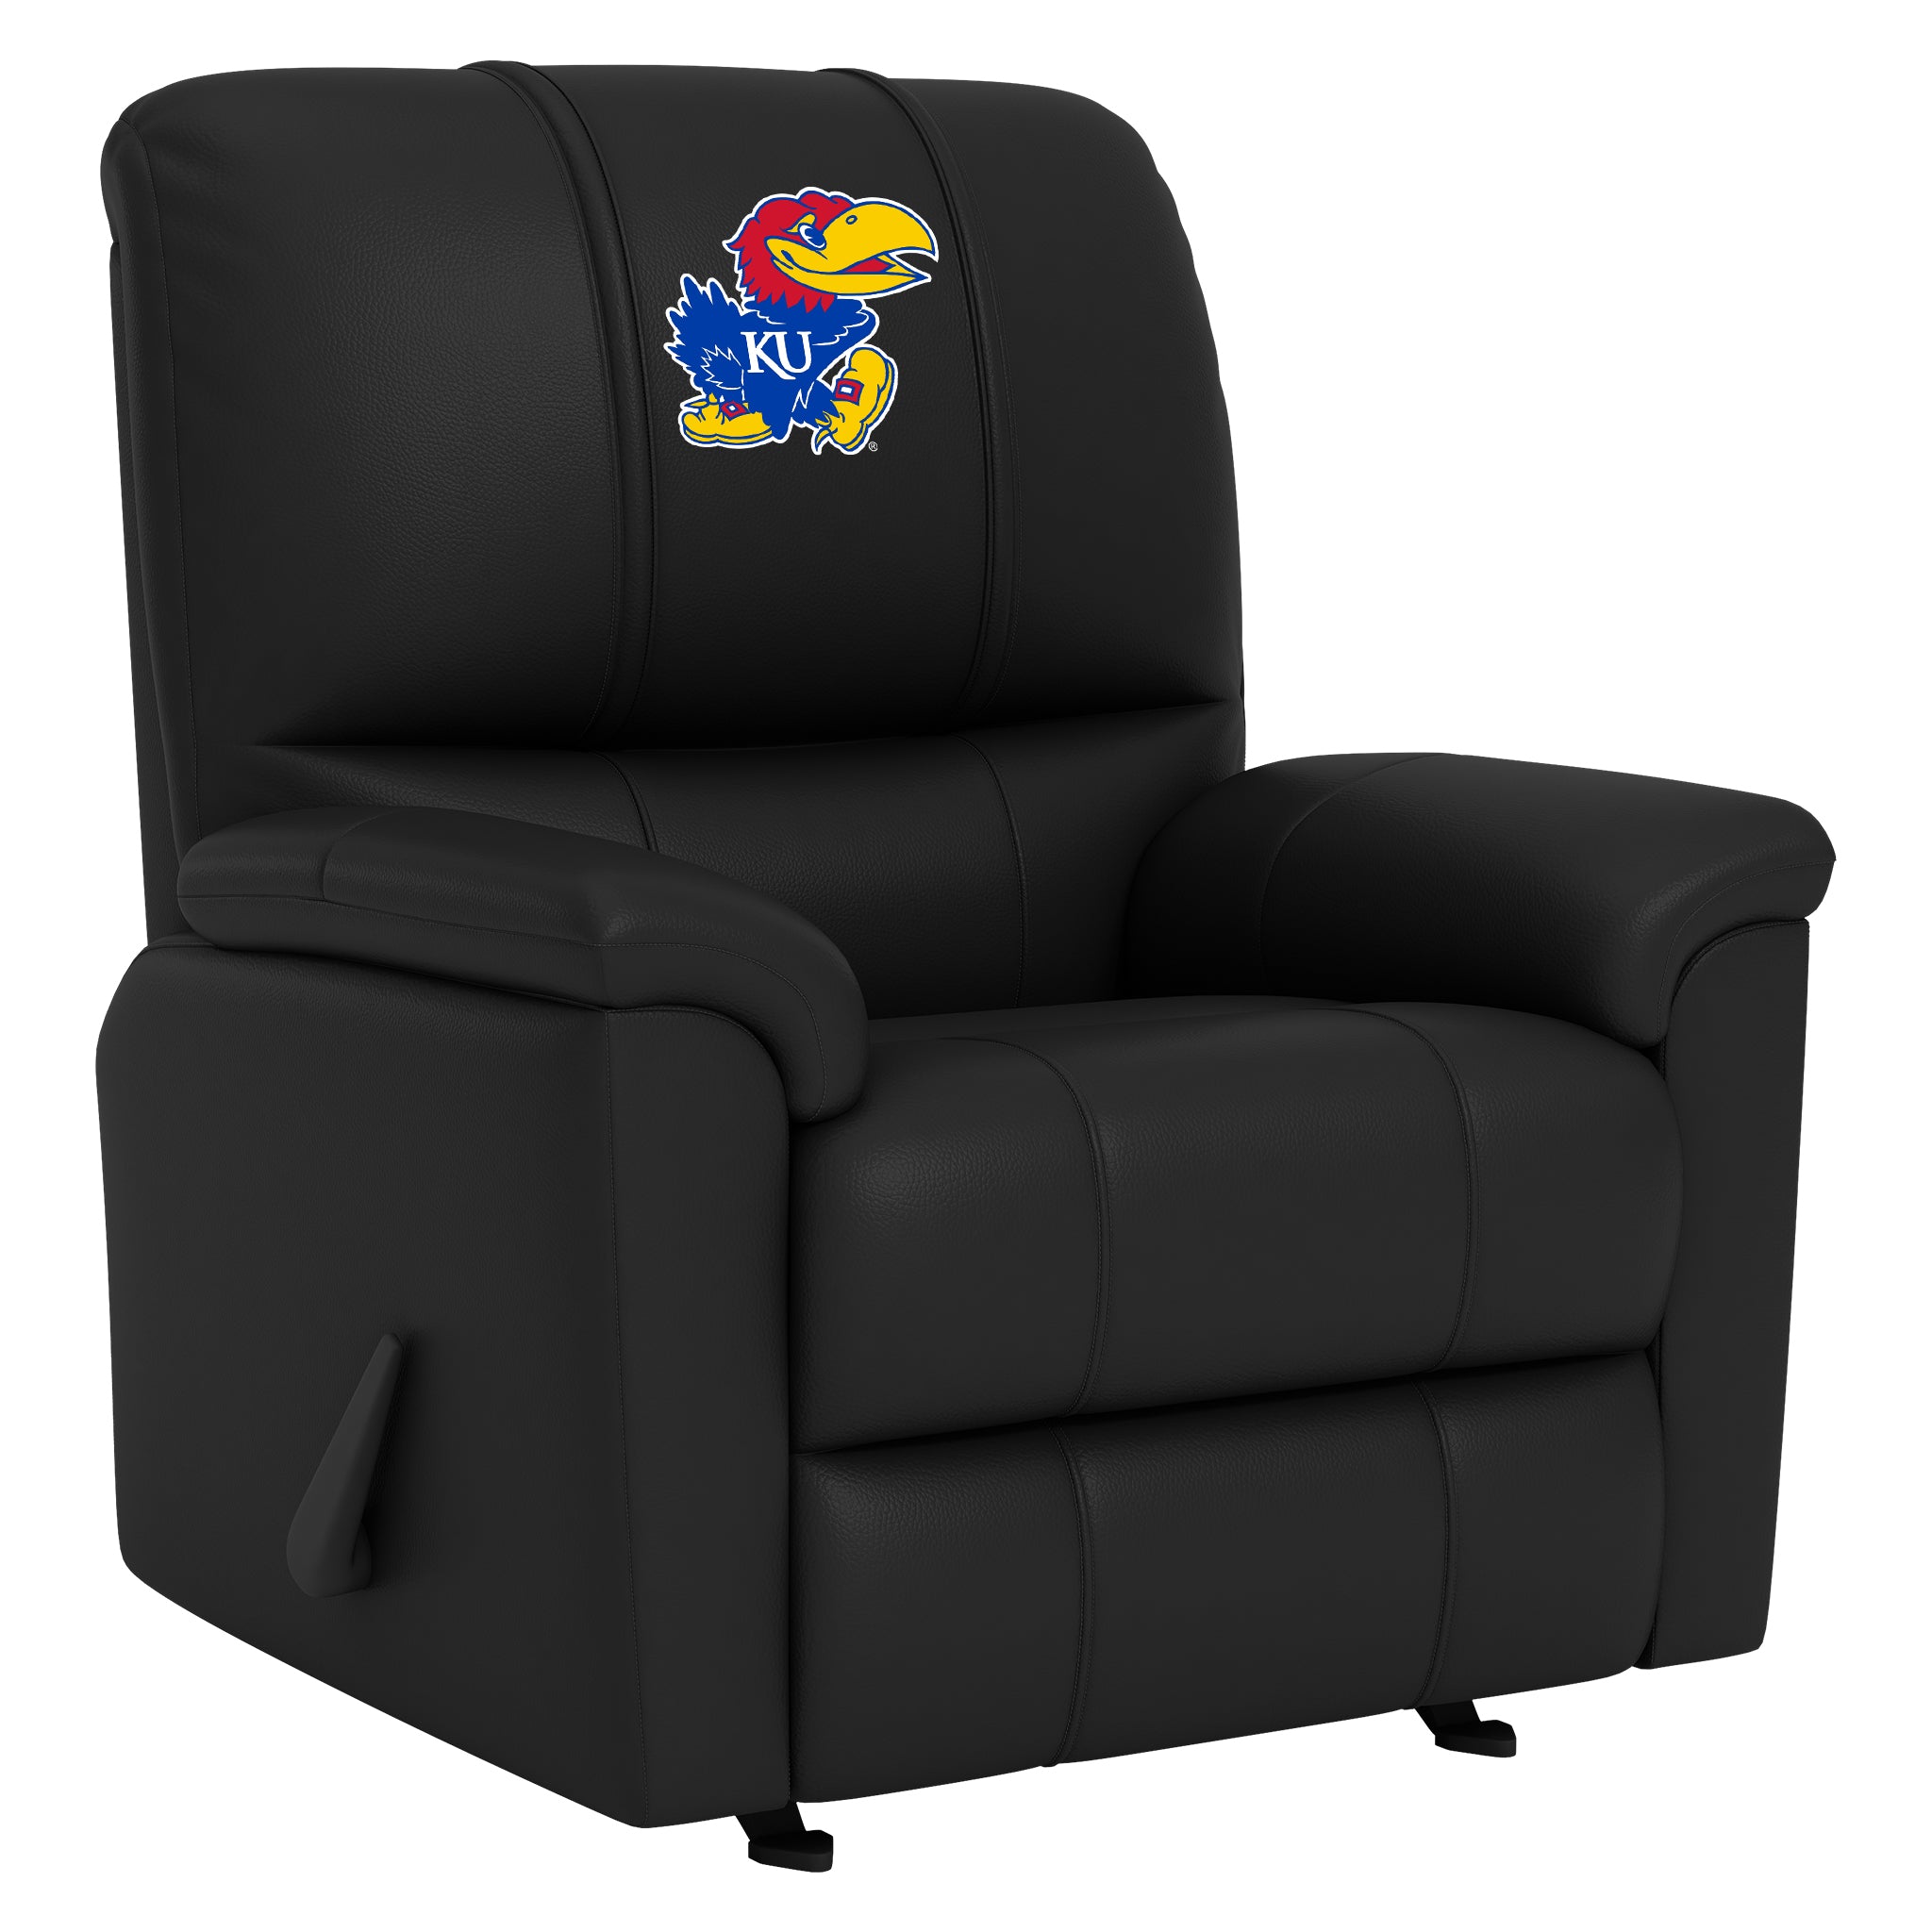 Kansas Jayhawks Silver Club Chair with Kansas Jayhawks Logo Panel